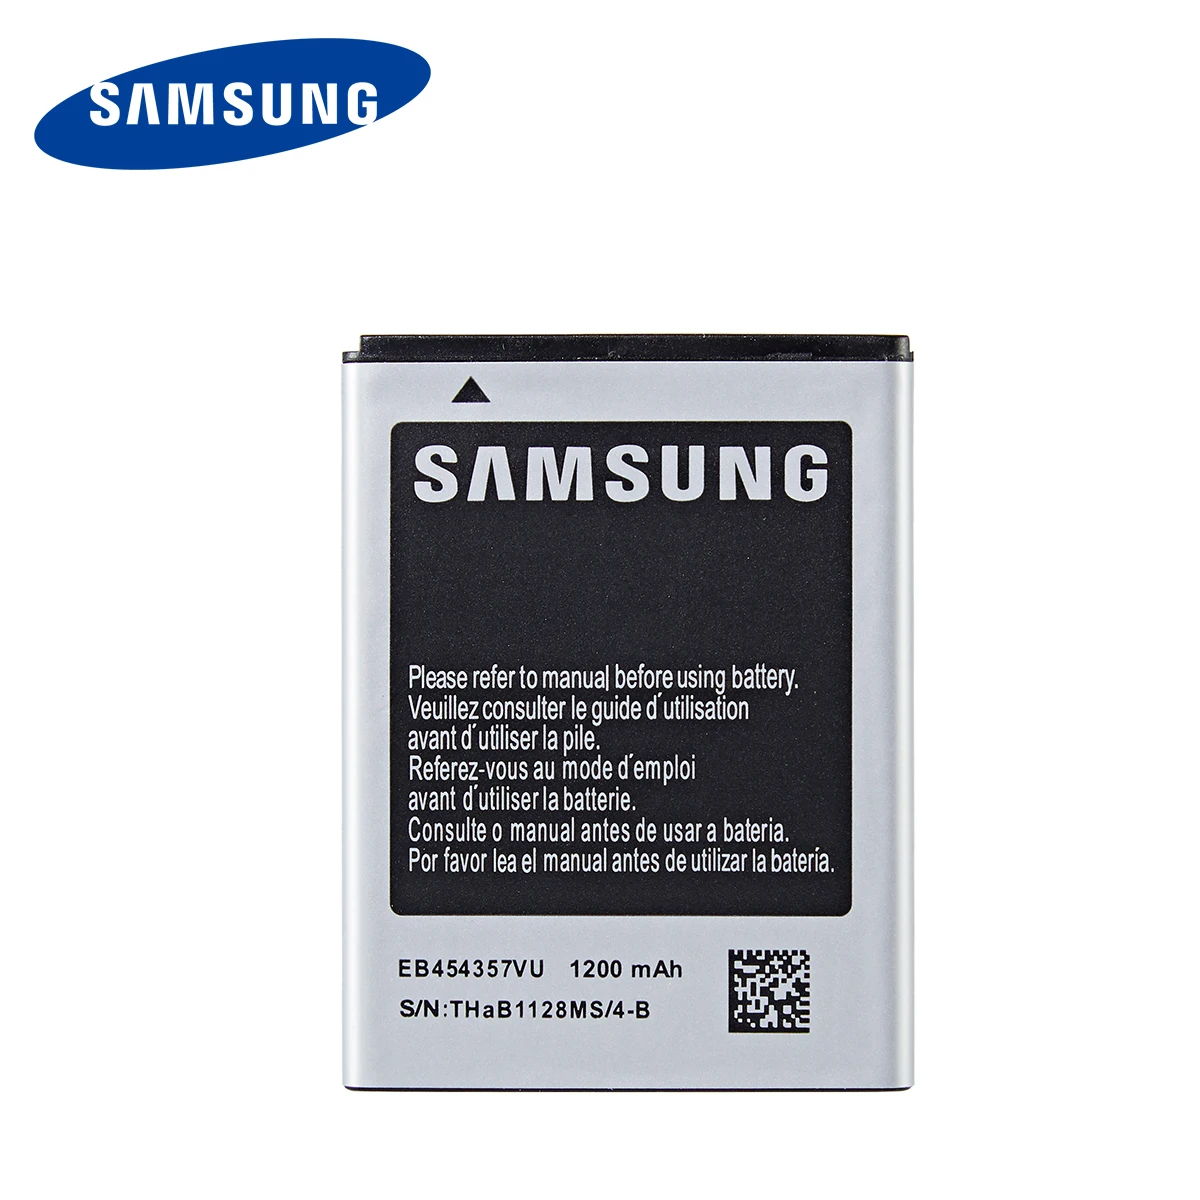 SAMSUNG Originalus EB454357VU 1200mAh Bateriją, Skirtą Samsung Galaxy Y S5360 Y Pro B5510 Wave S5380 S5368 Pocket S5300 Chat B5330 2